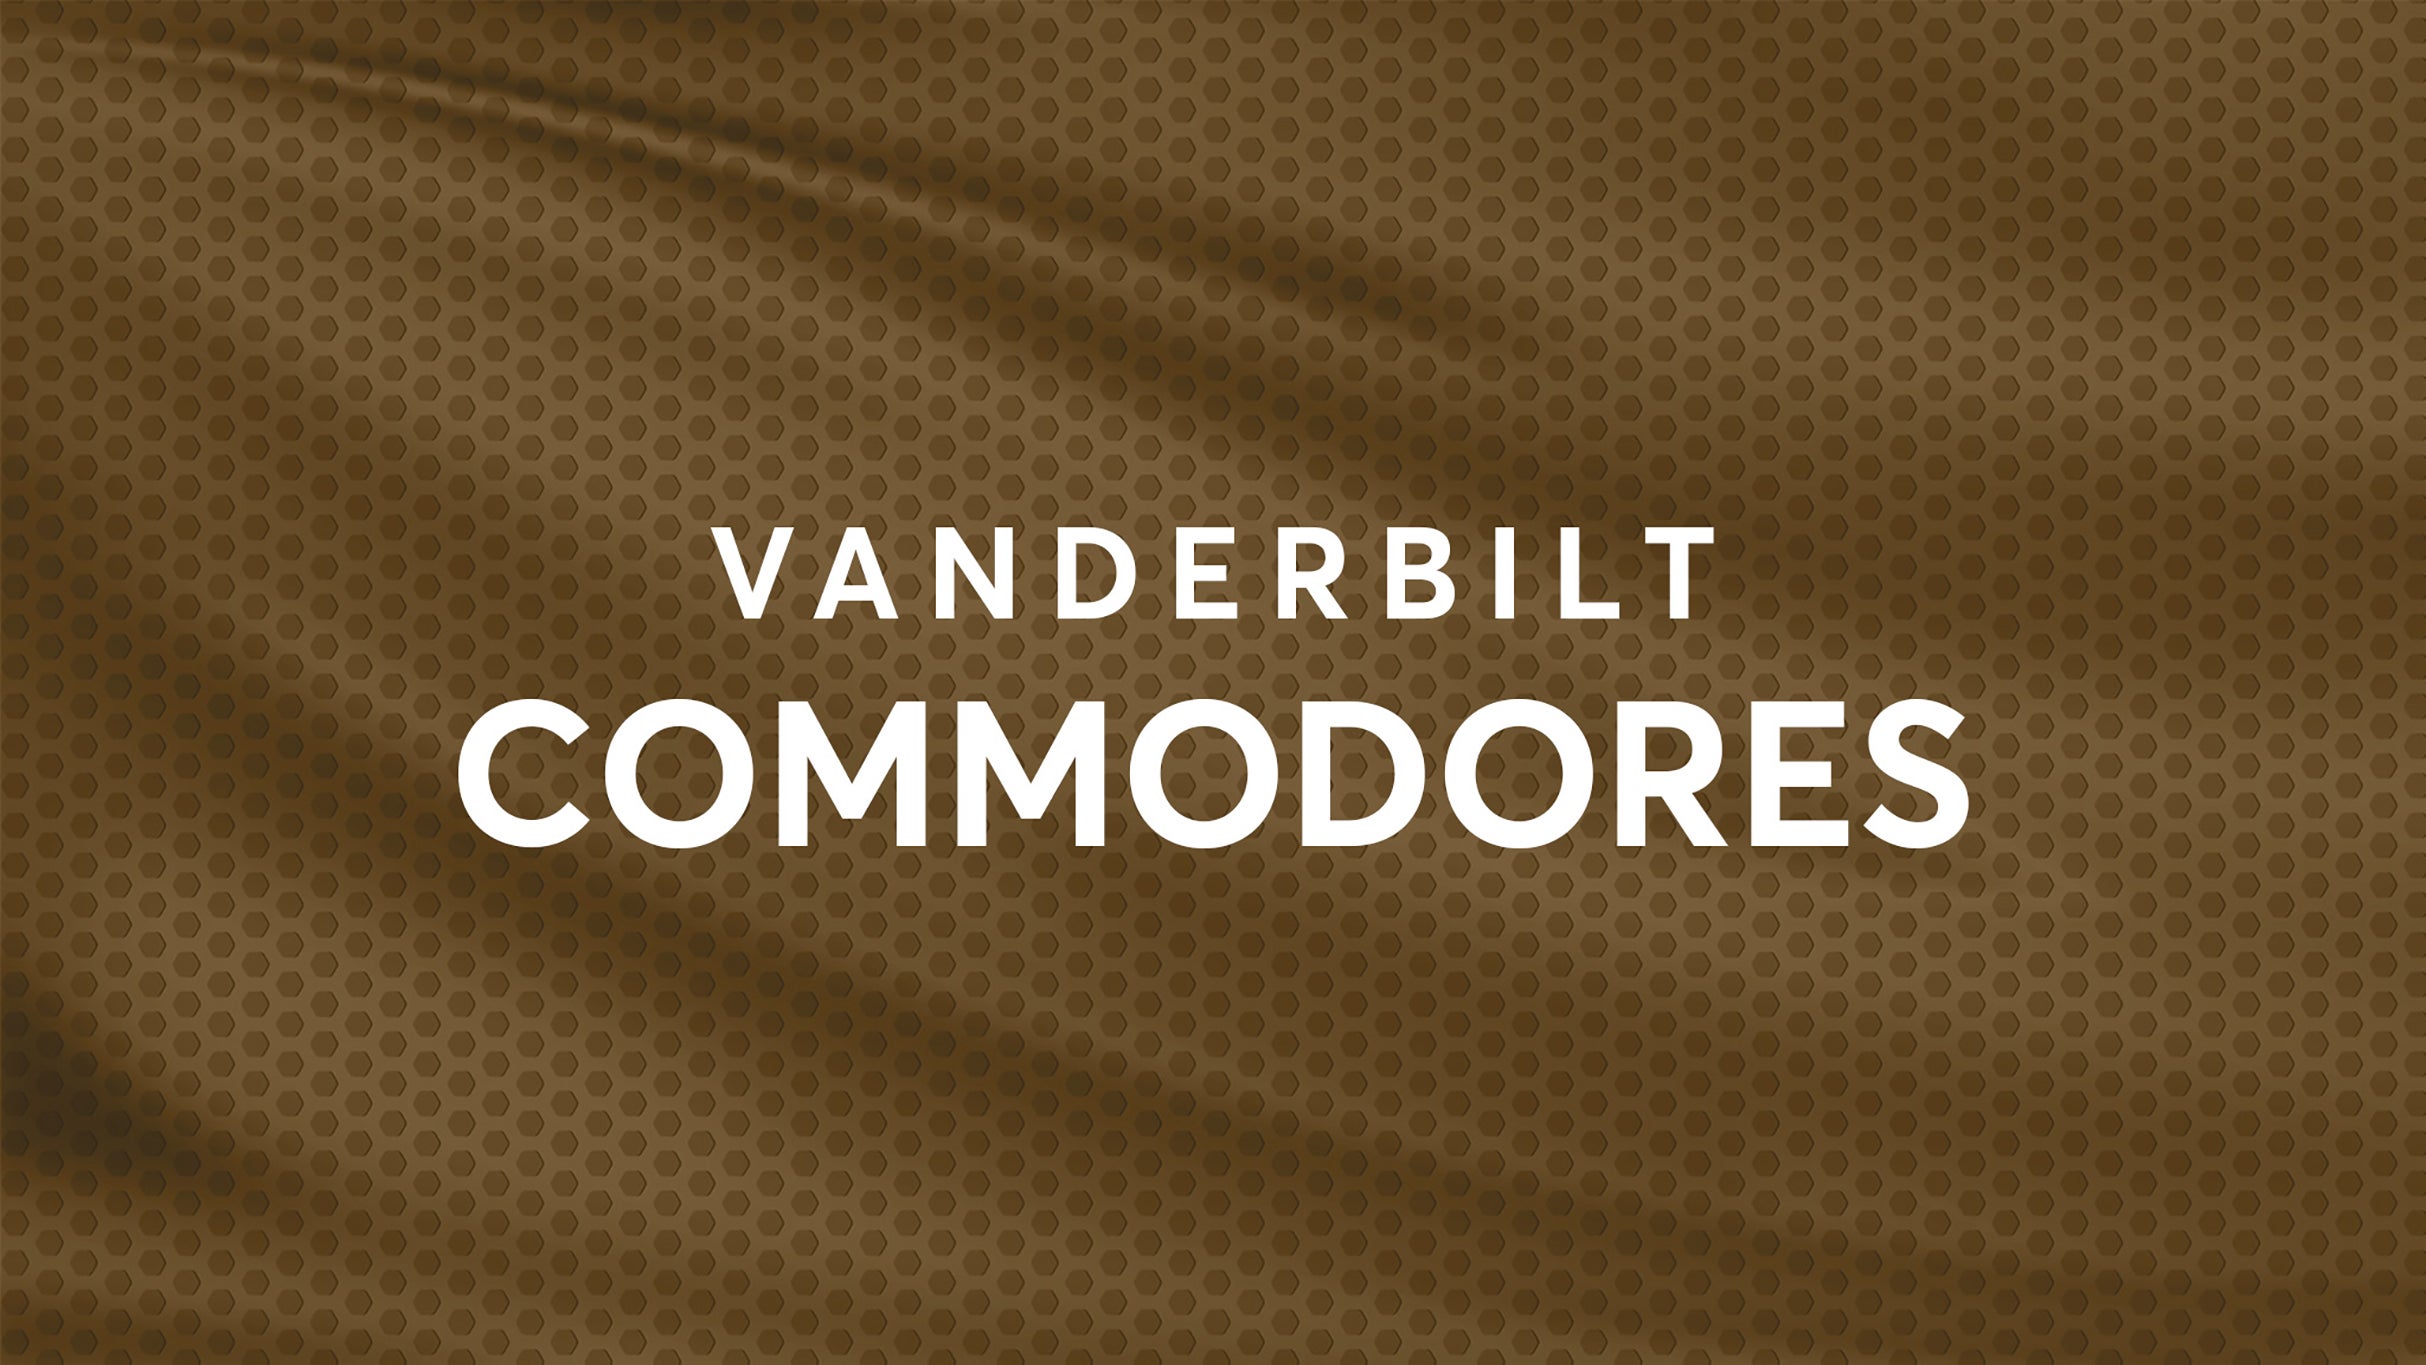 Vanderbilt Commodores Football vs. Tennessee Vols Football hero